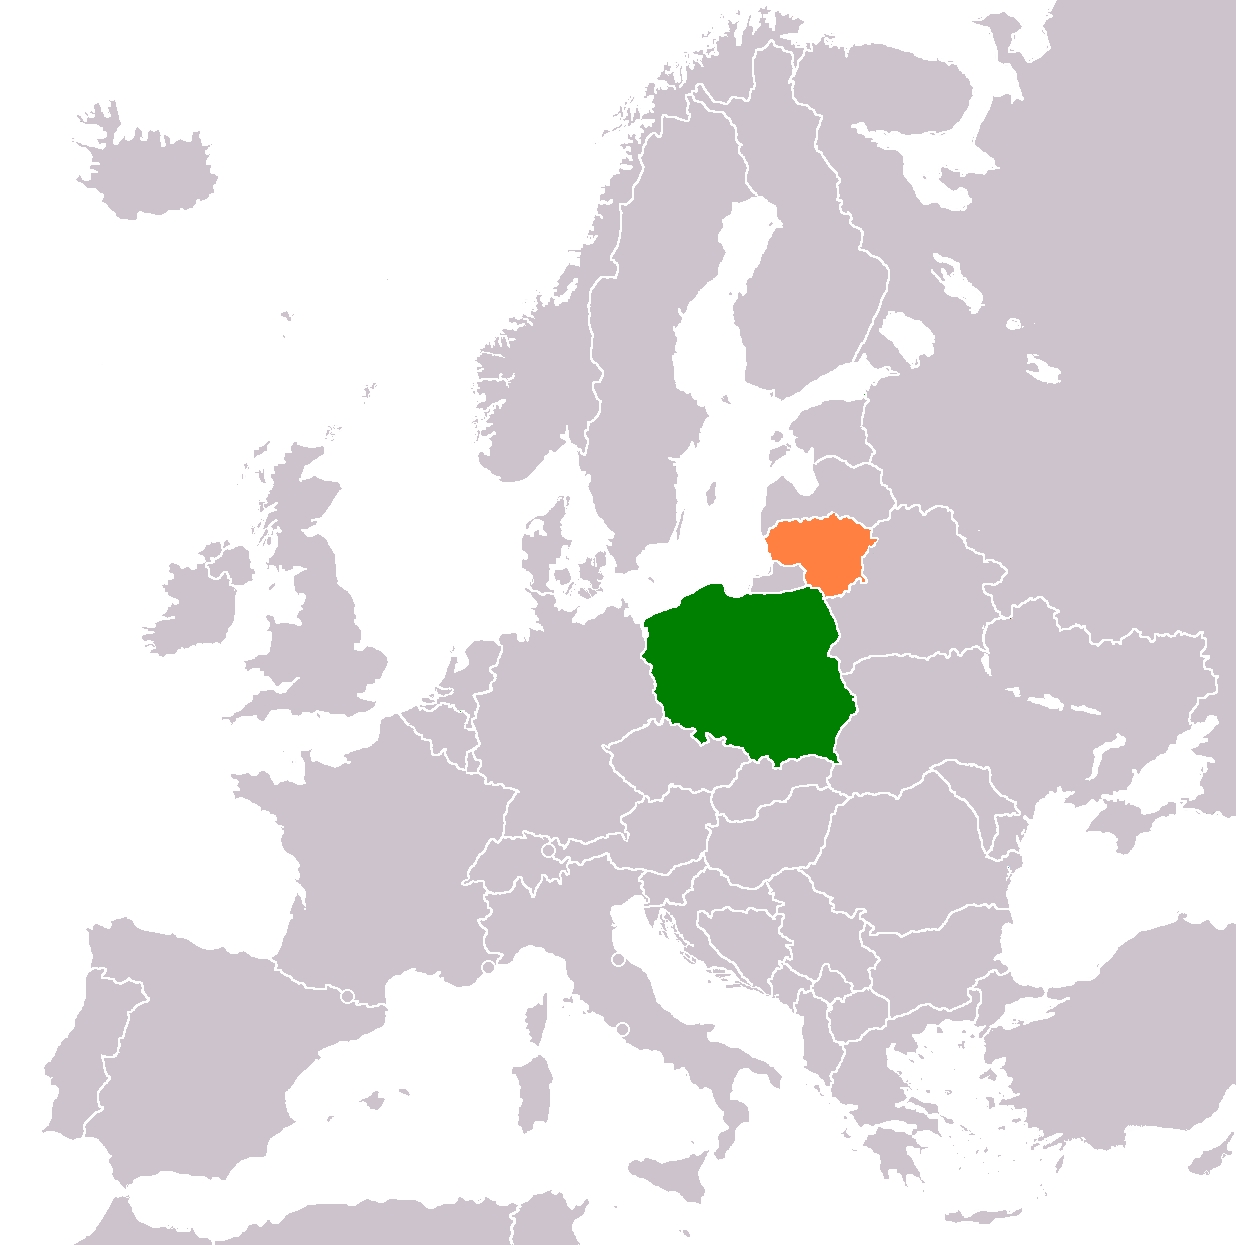 Poland and Lithuania